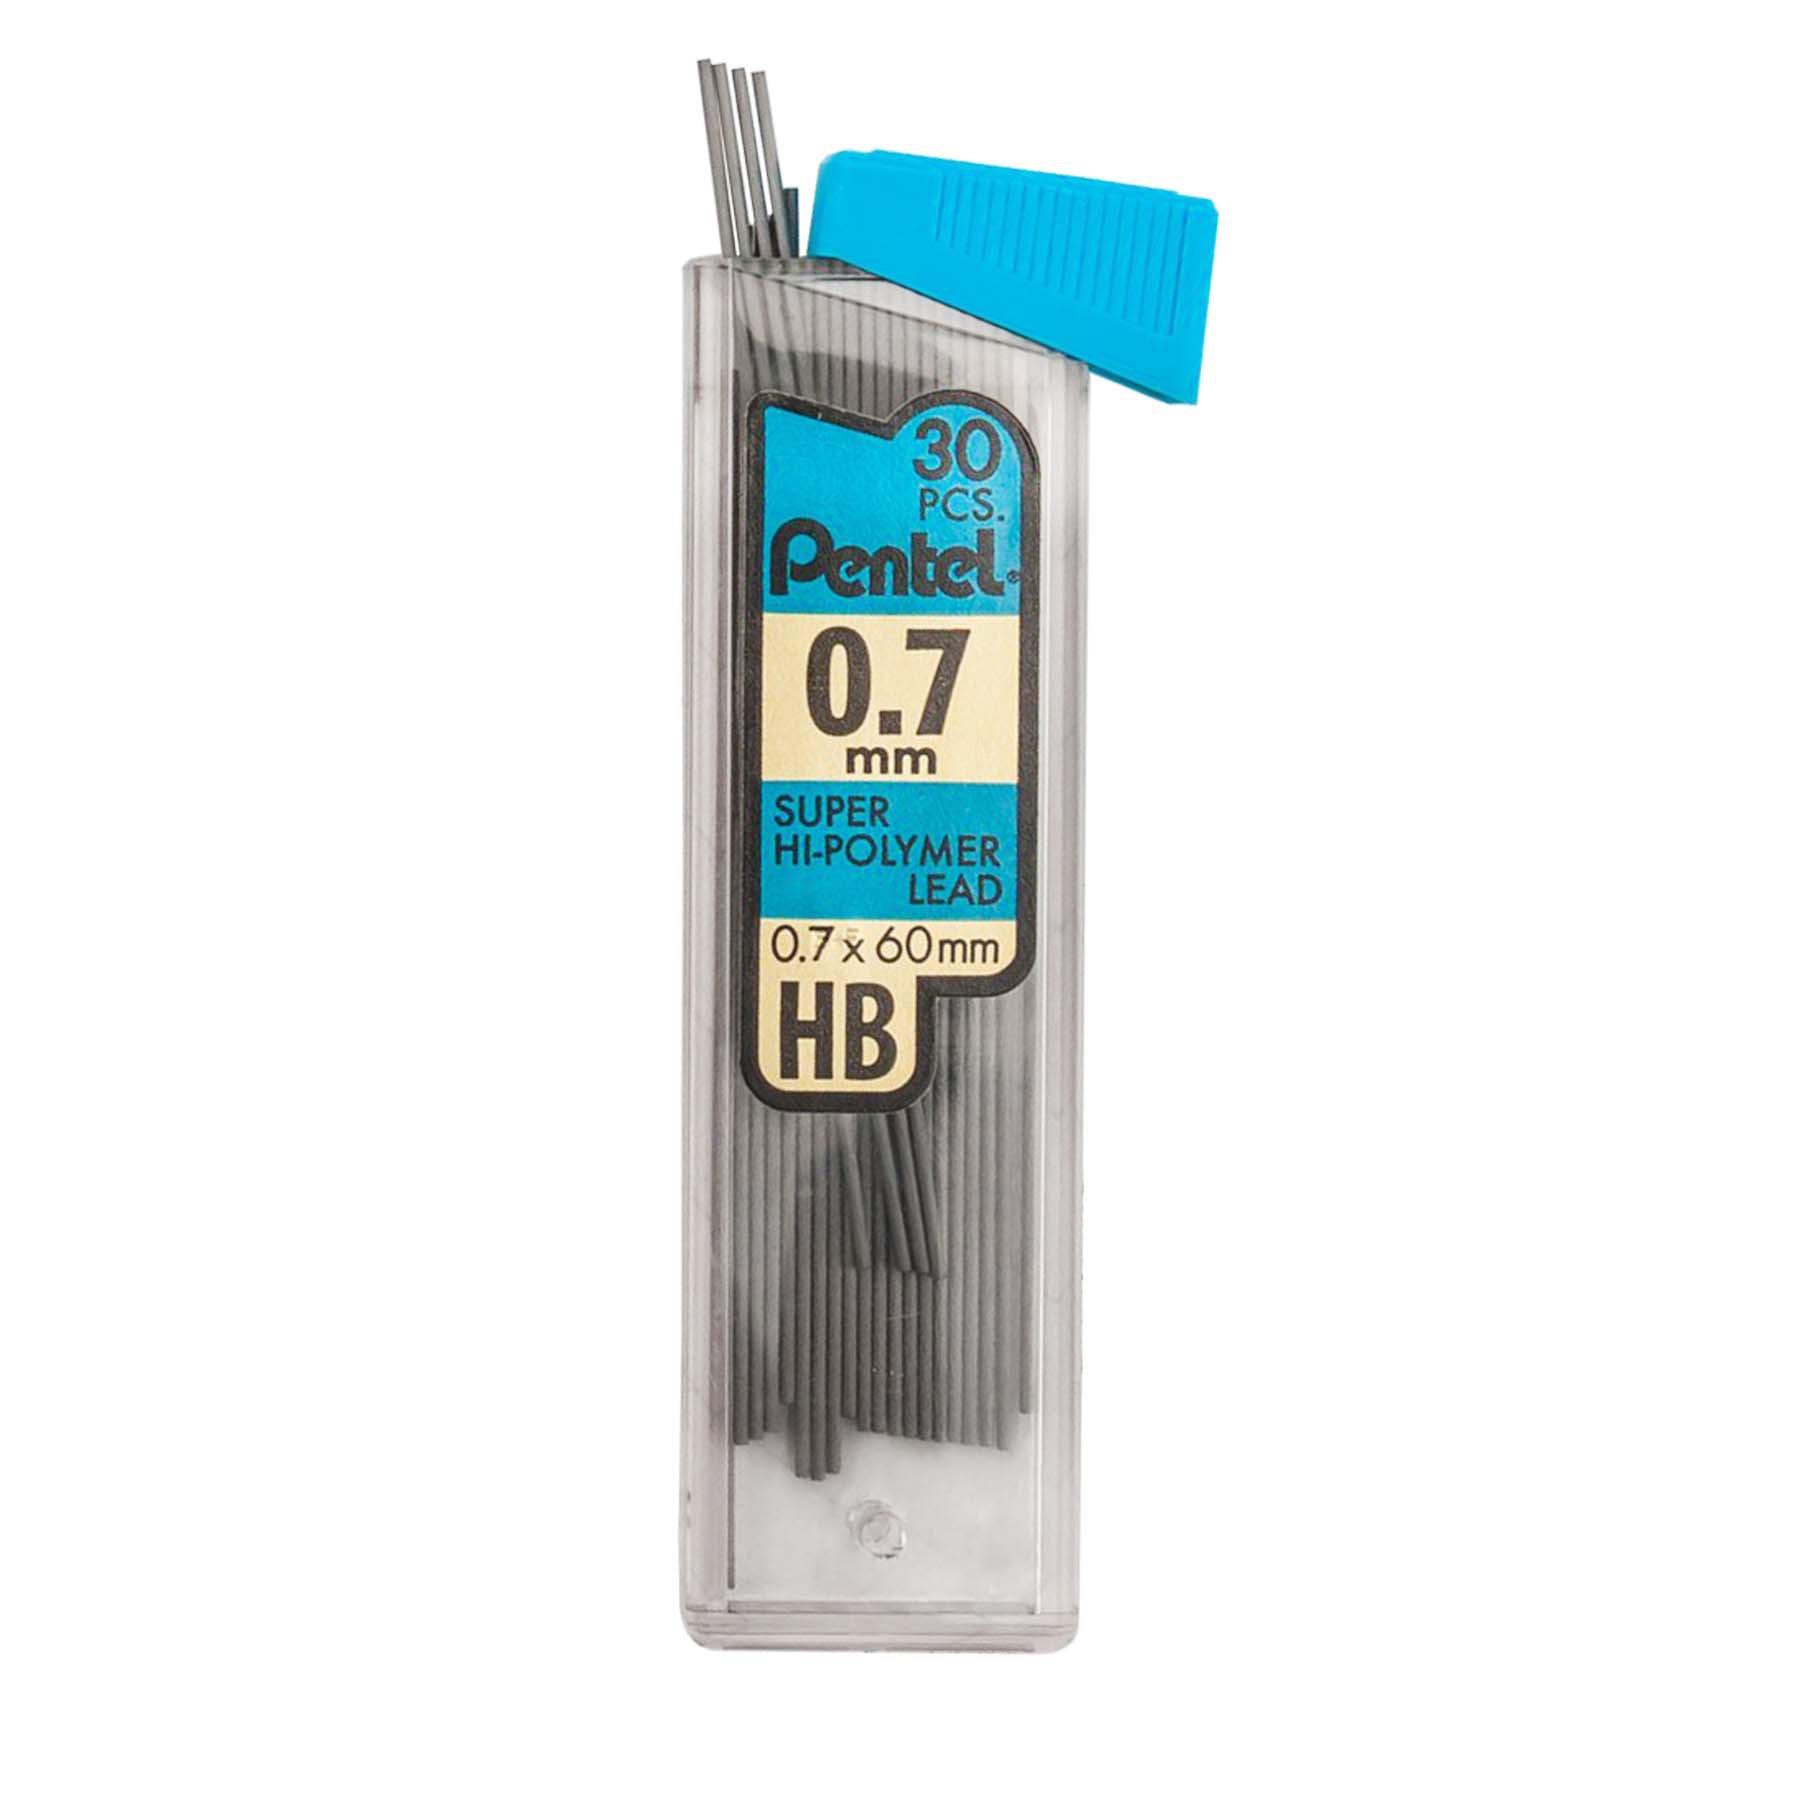 HB Super Hi-Polymer Leads, 0.7mm, Black, 30 Leads Per Pack, 12 Packs - Loomini